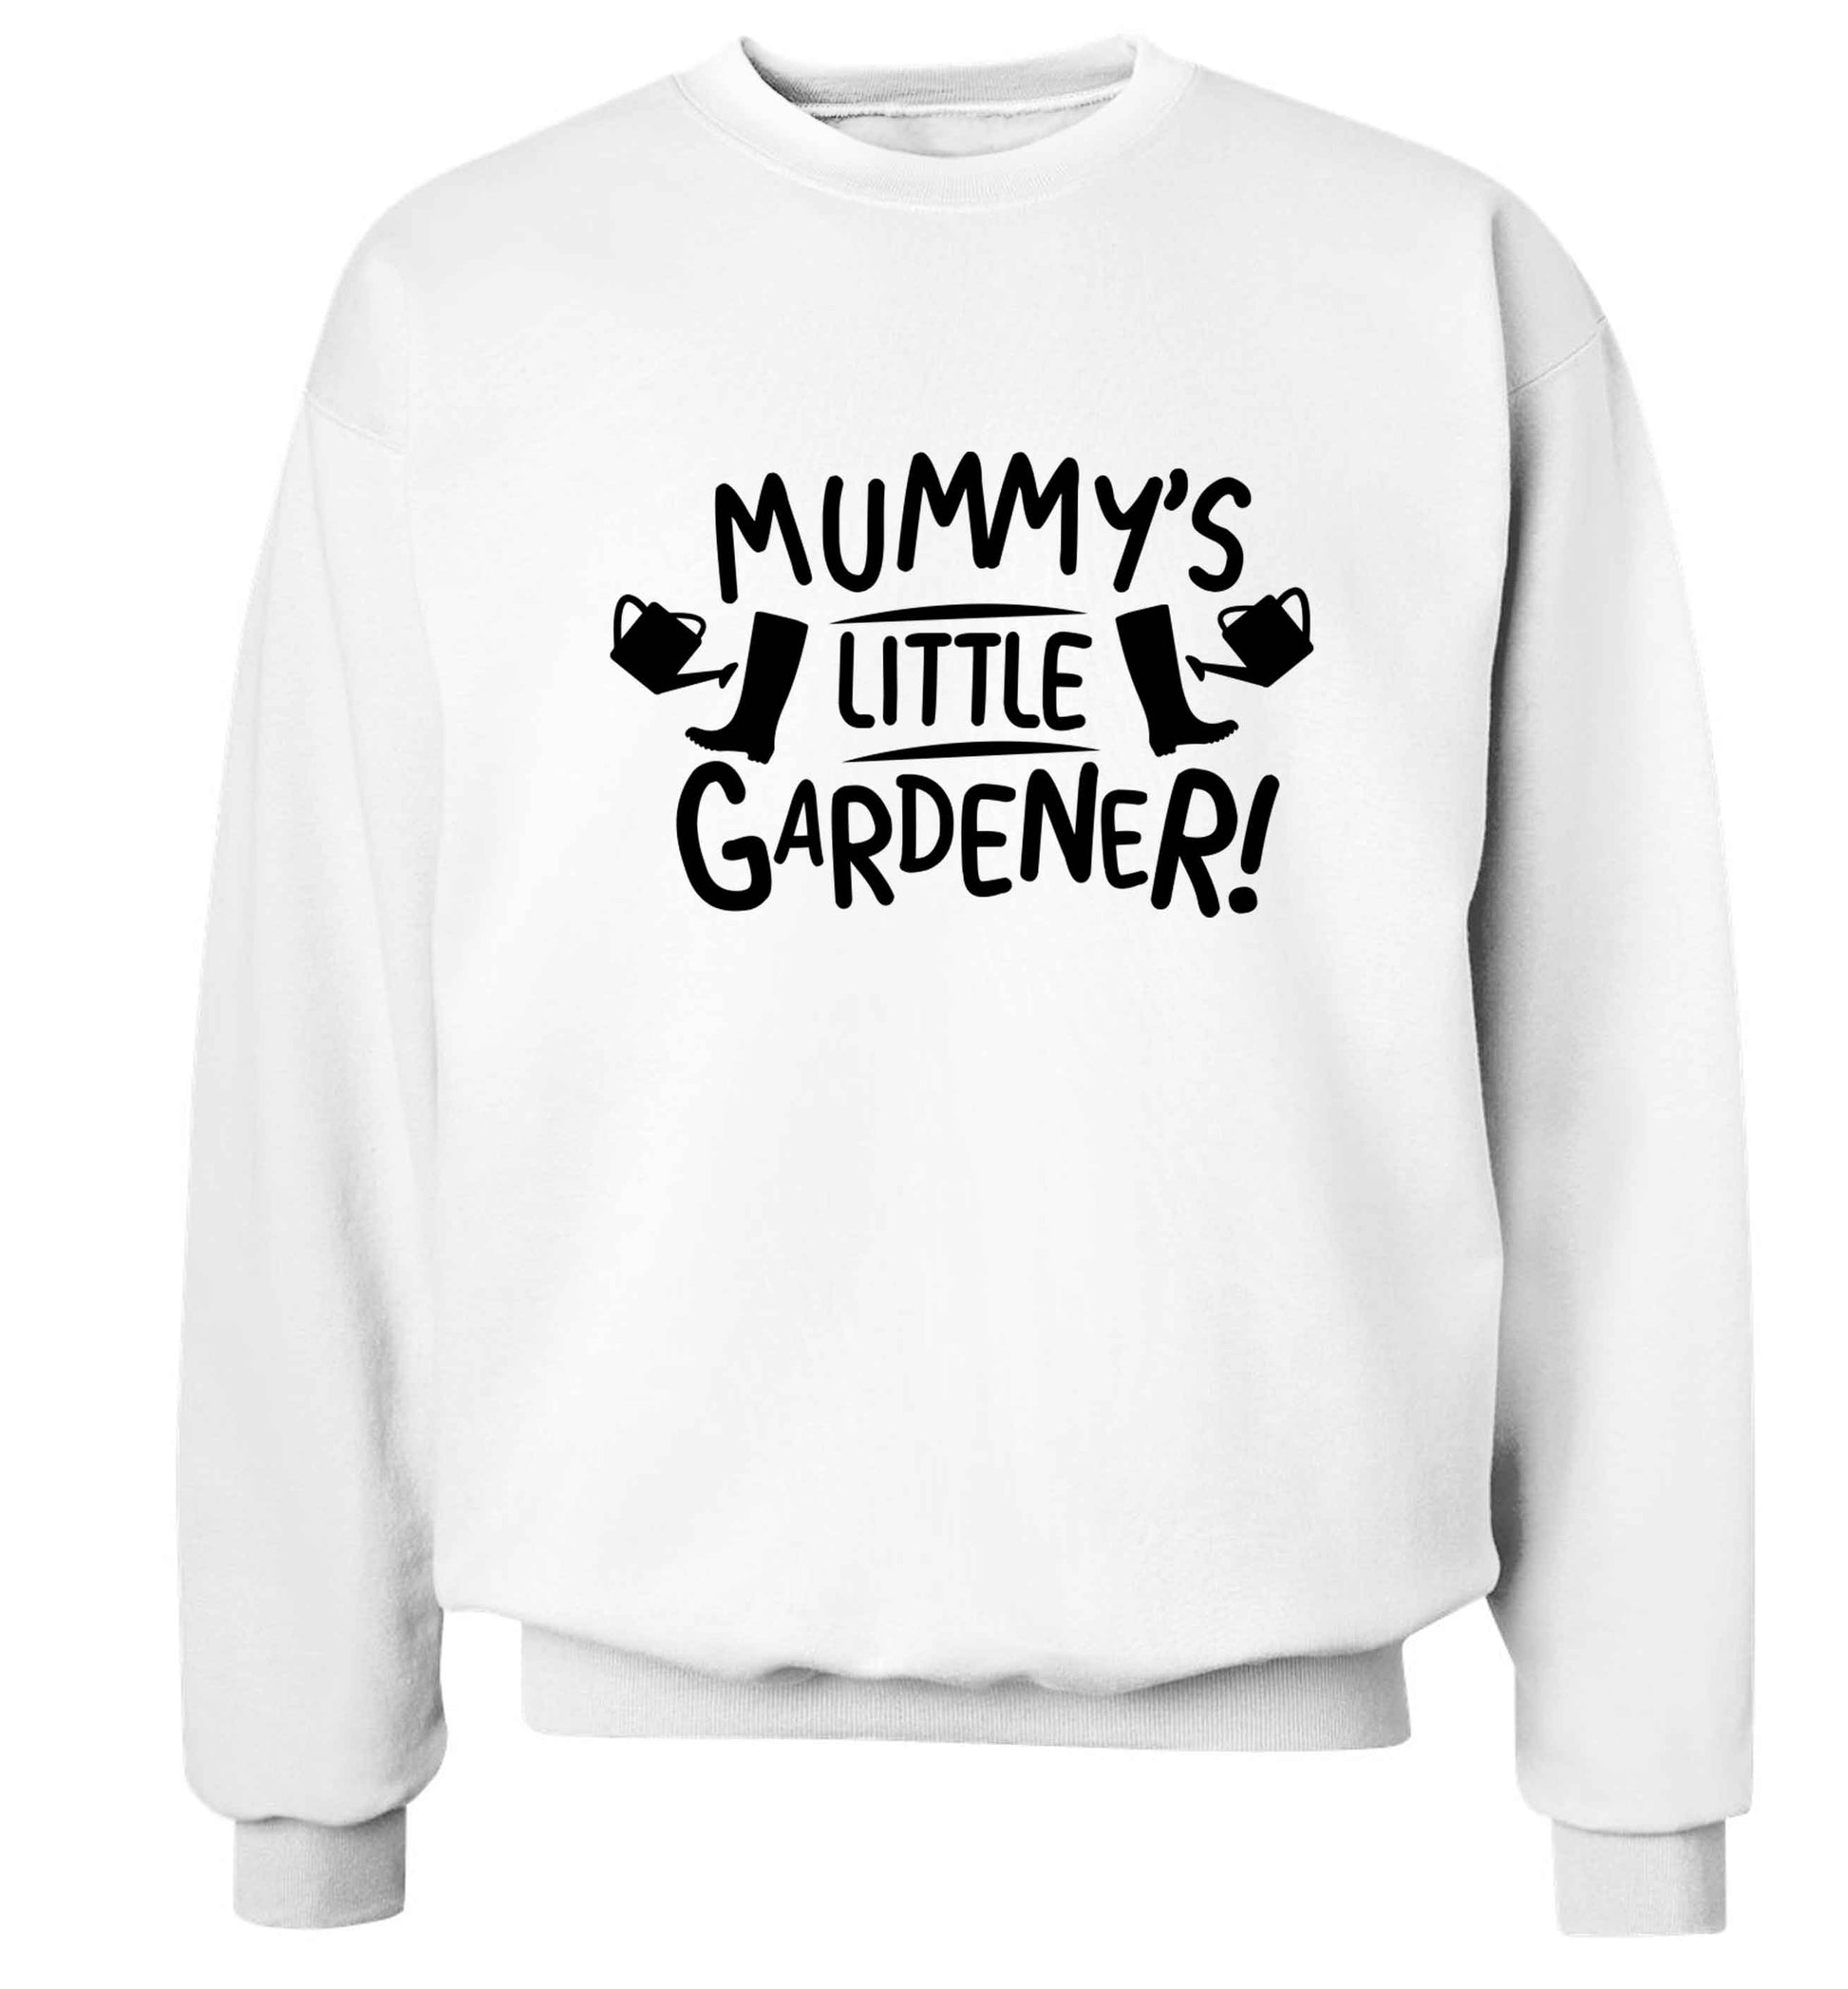 Mummy's little gardener Adult's unisex white Sweater 2XL